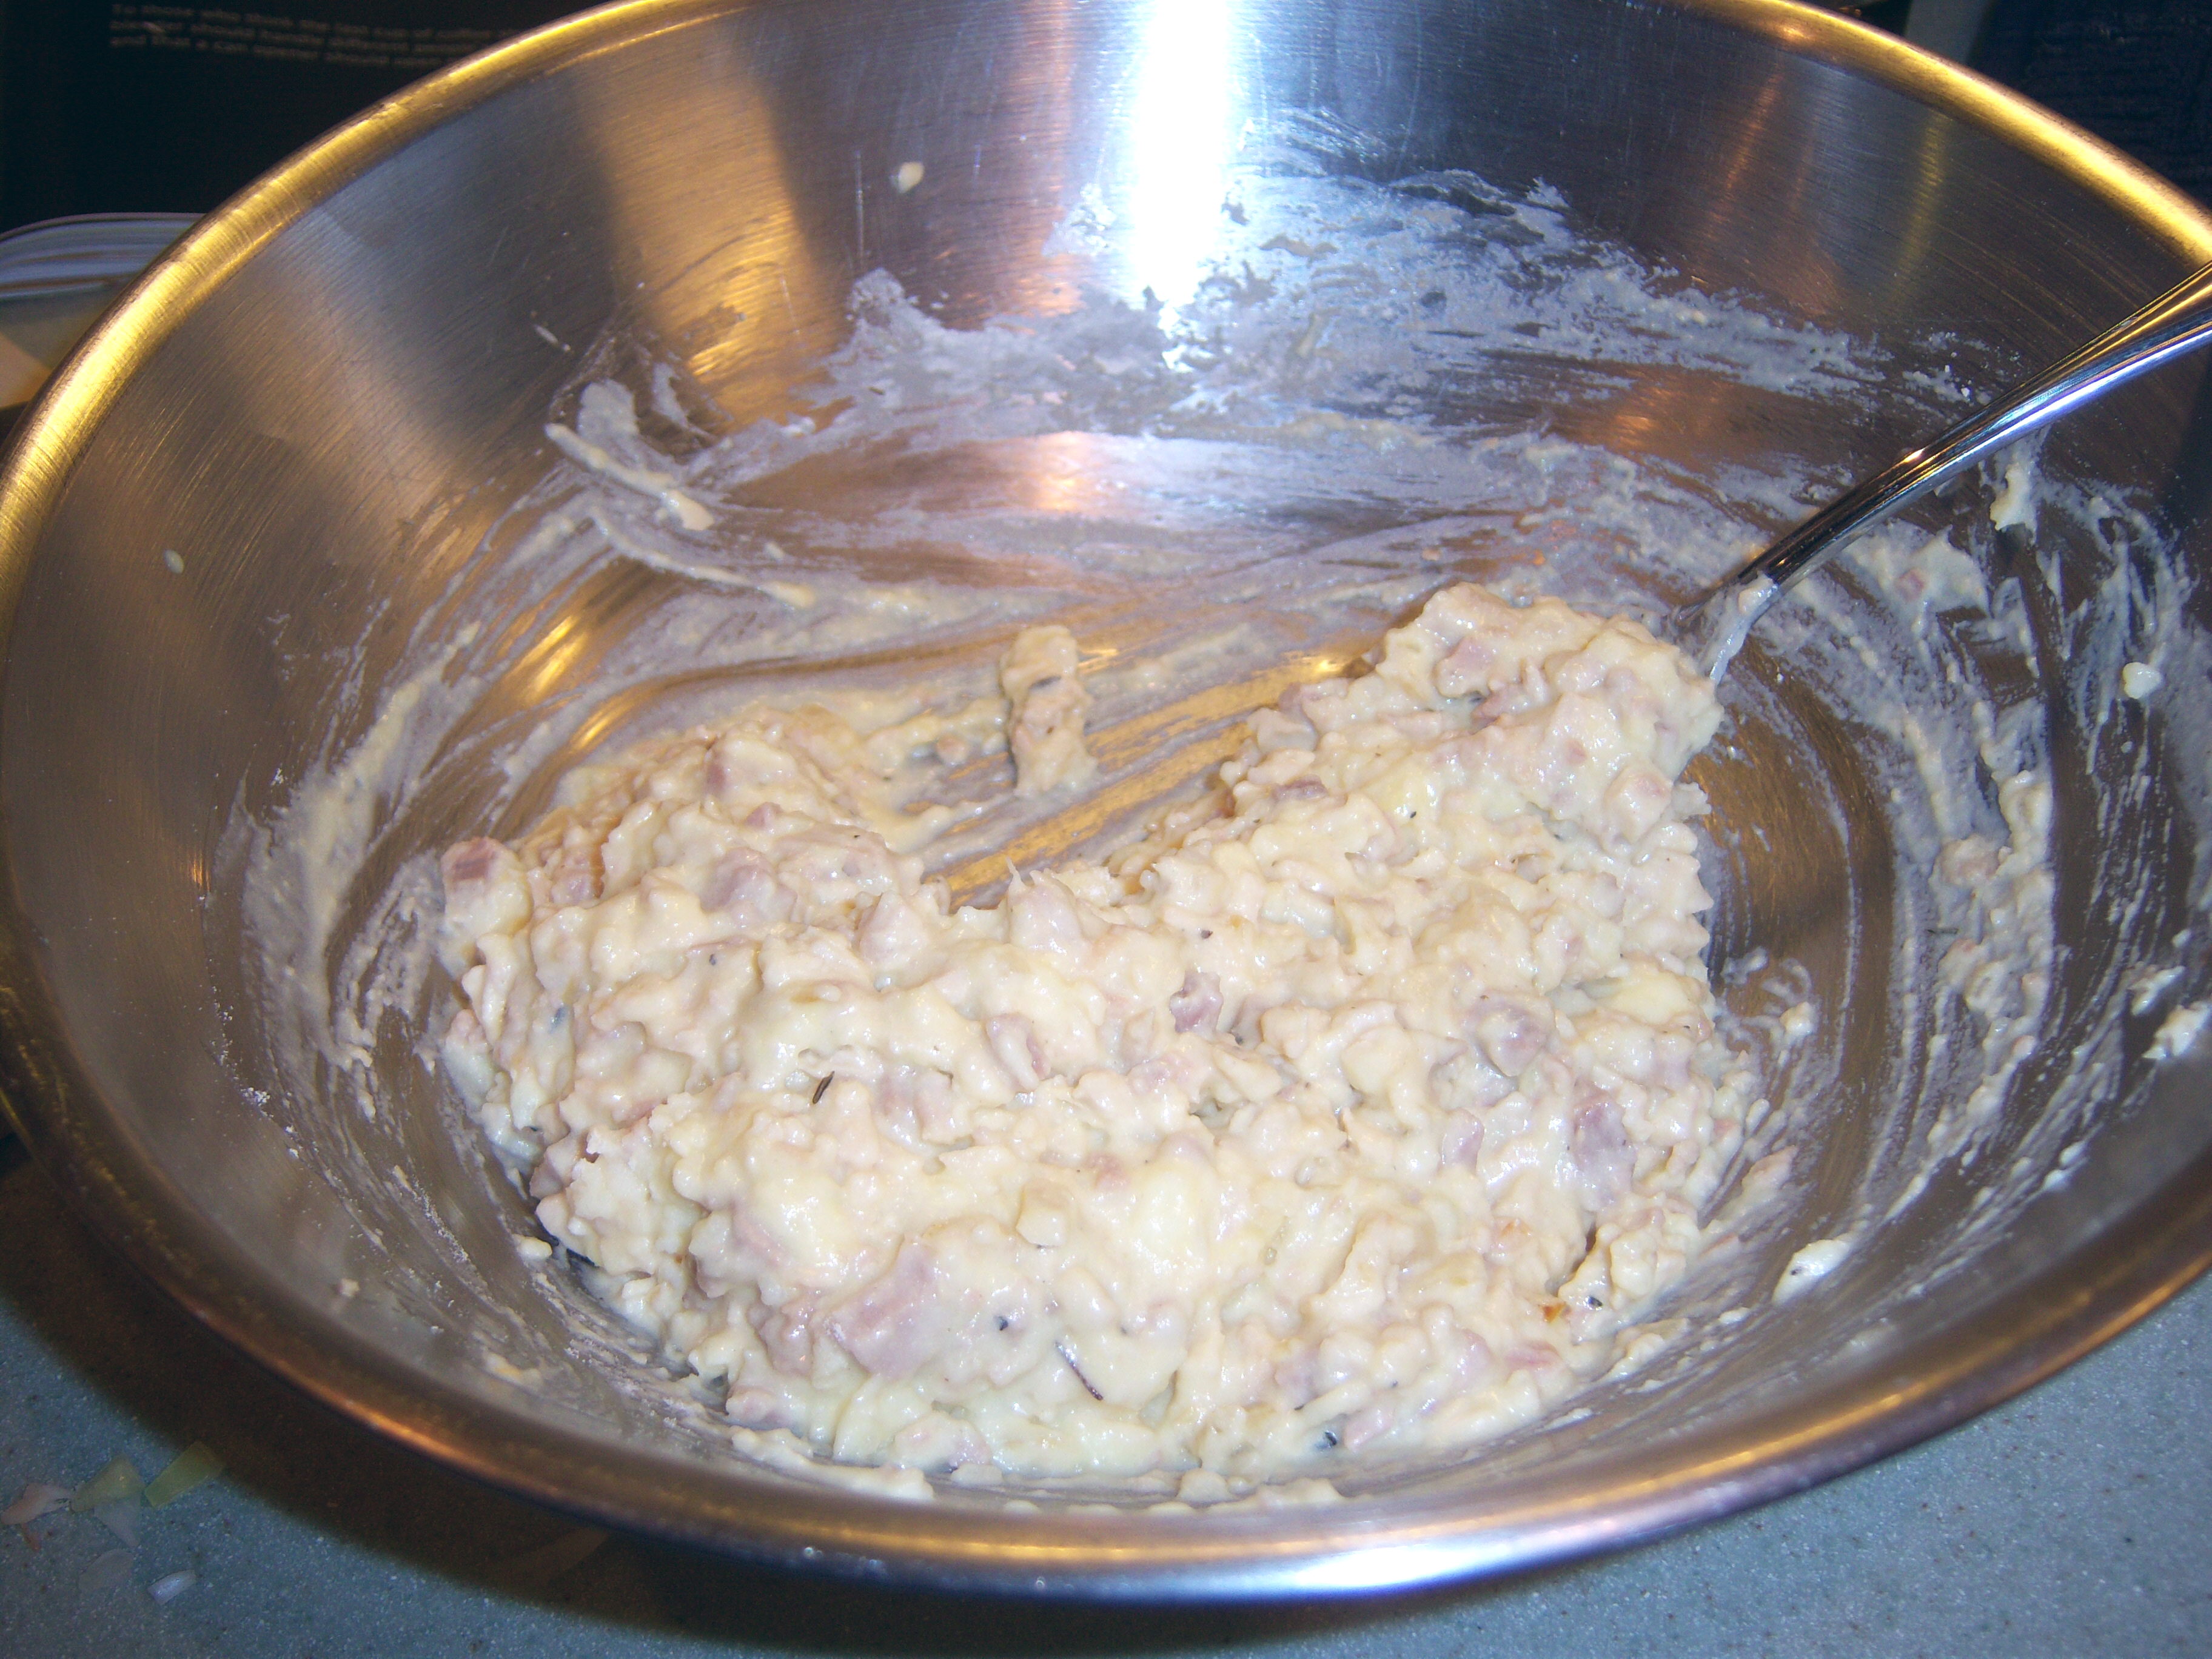 Croquette mixture